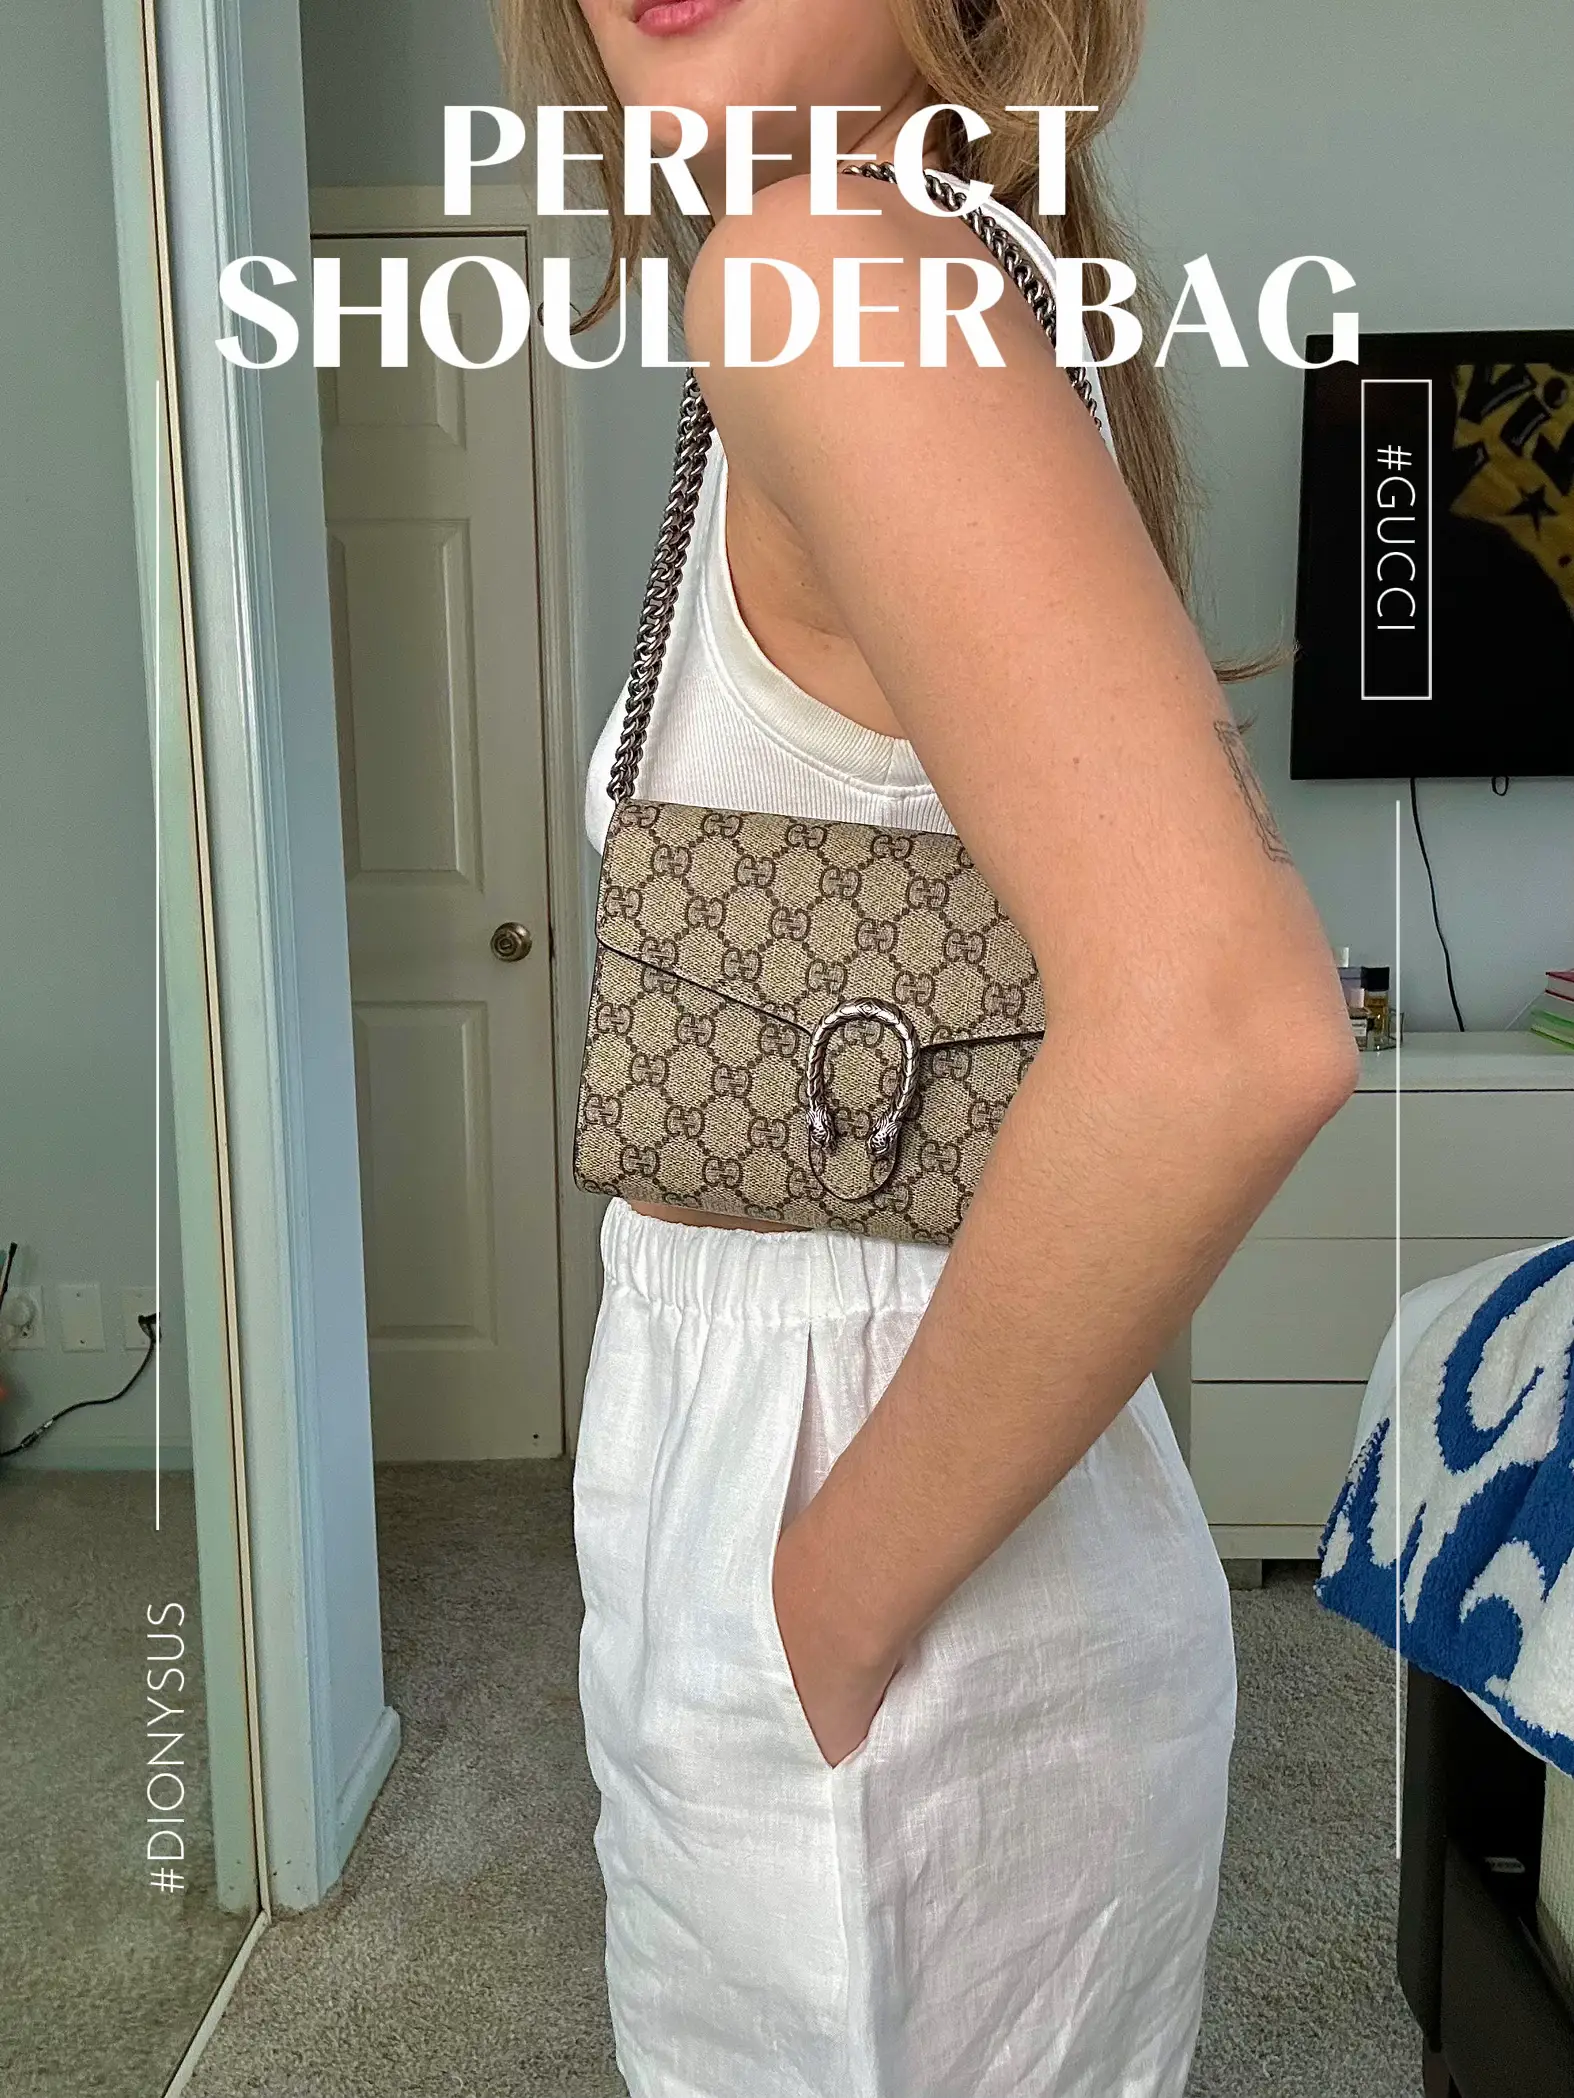 Gucci Dionysus medium GG shoulder bag Unboxing & Review